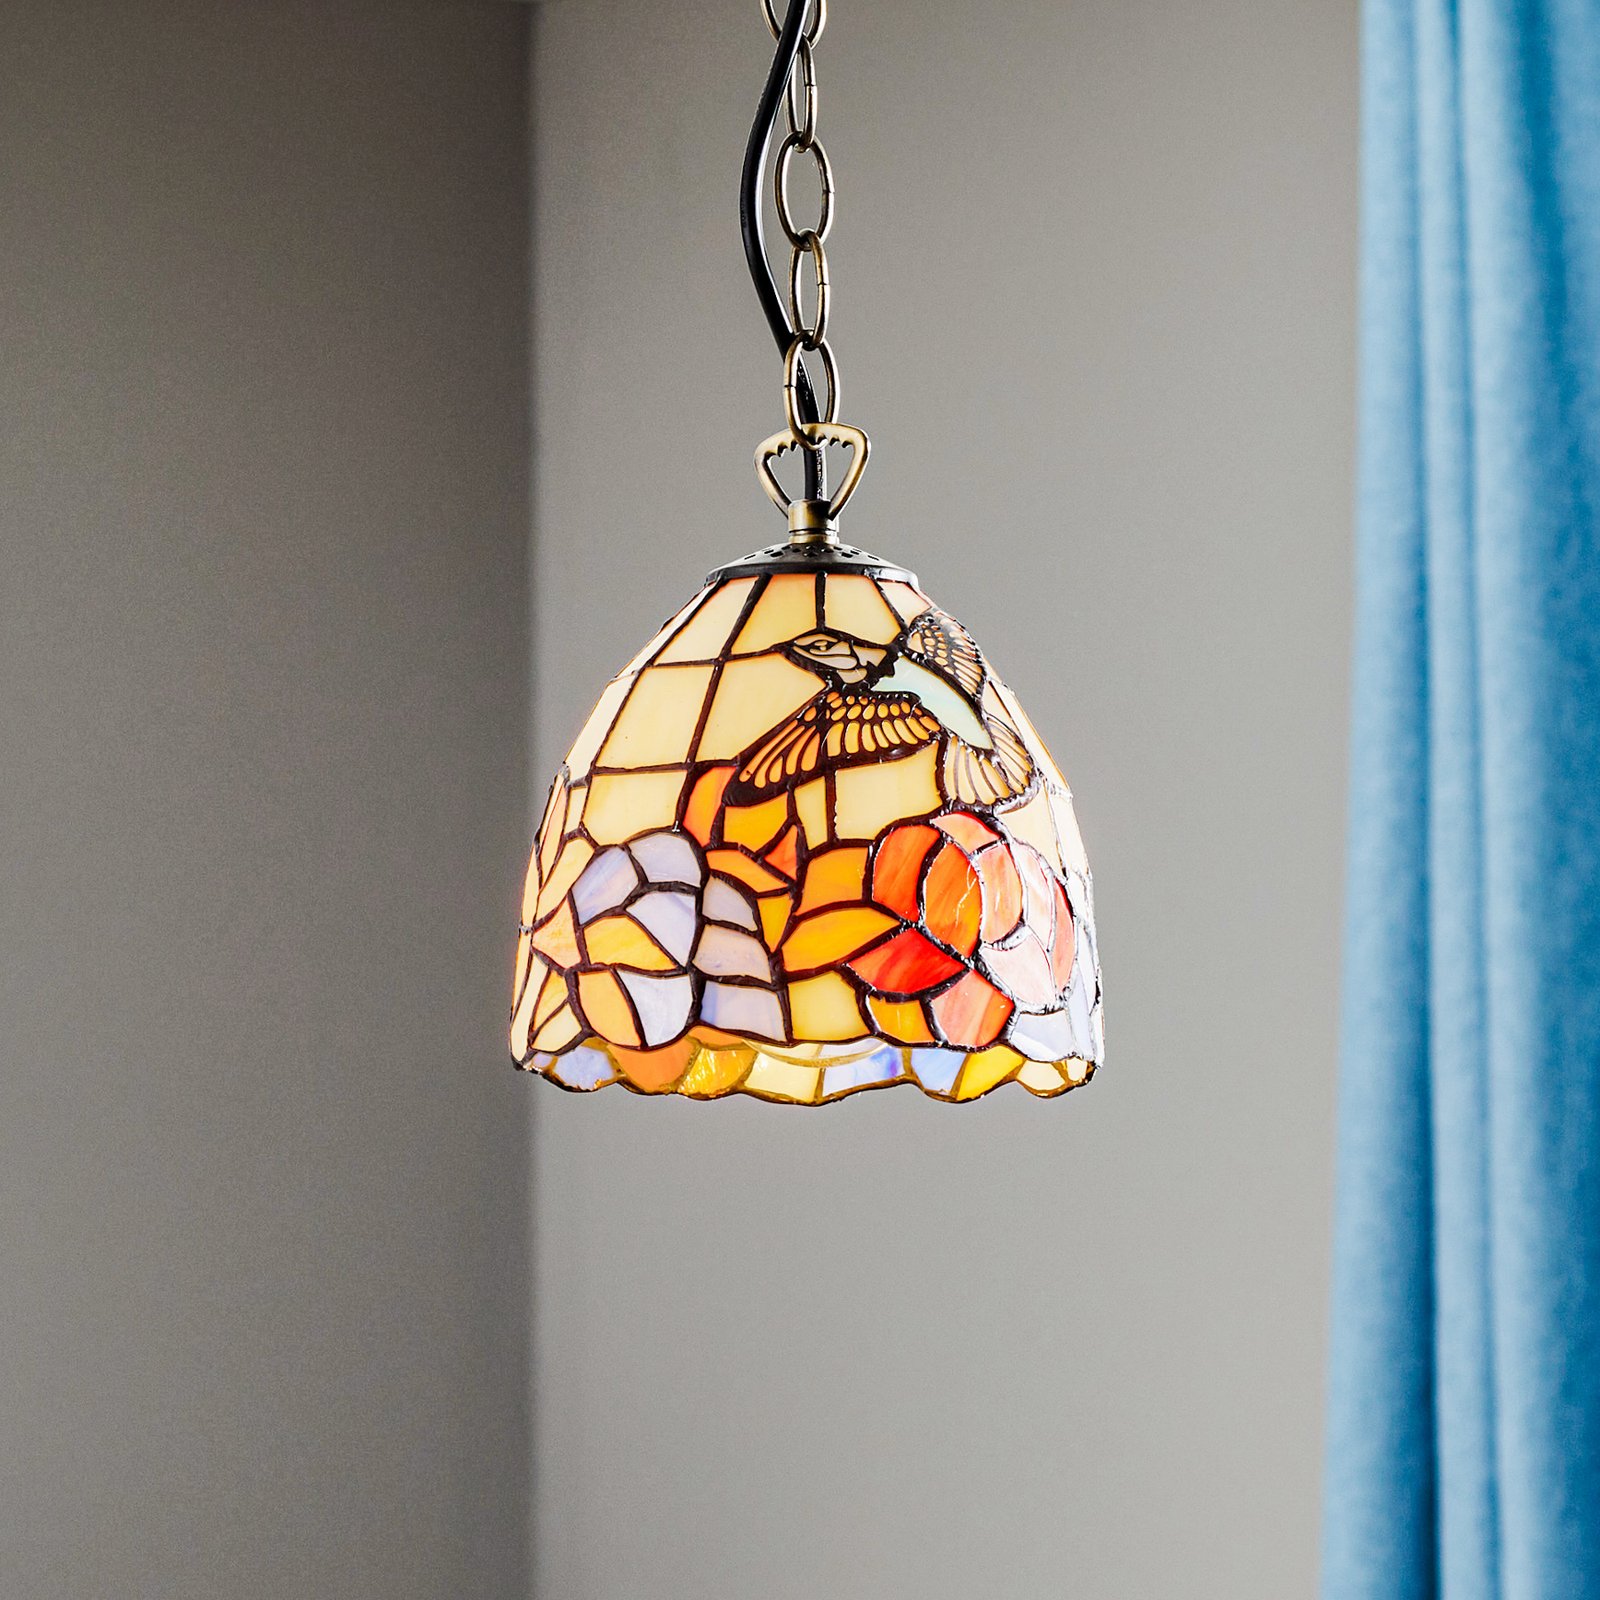 Tiffany-style hanging light COLIBRI